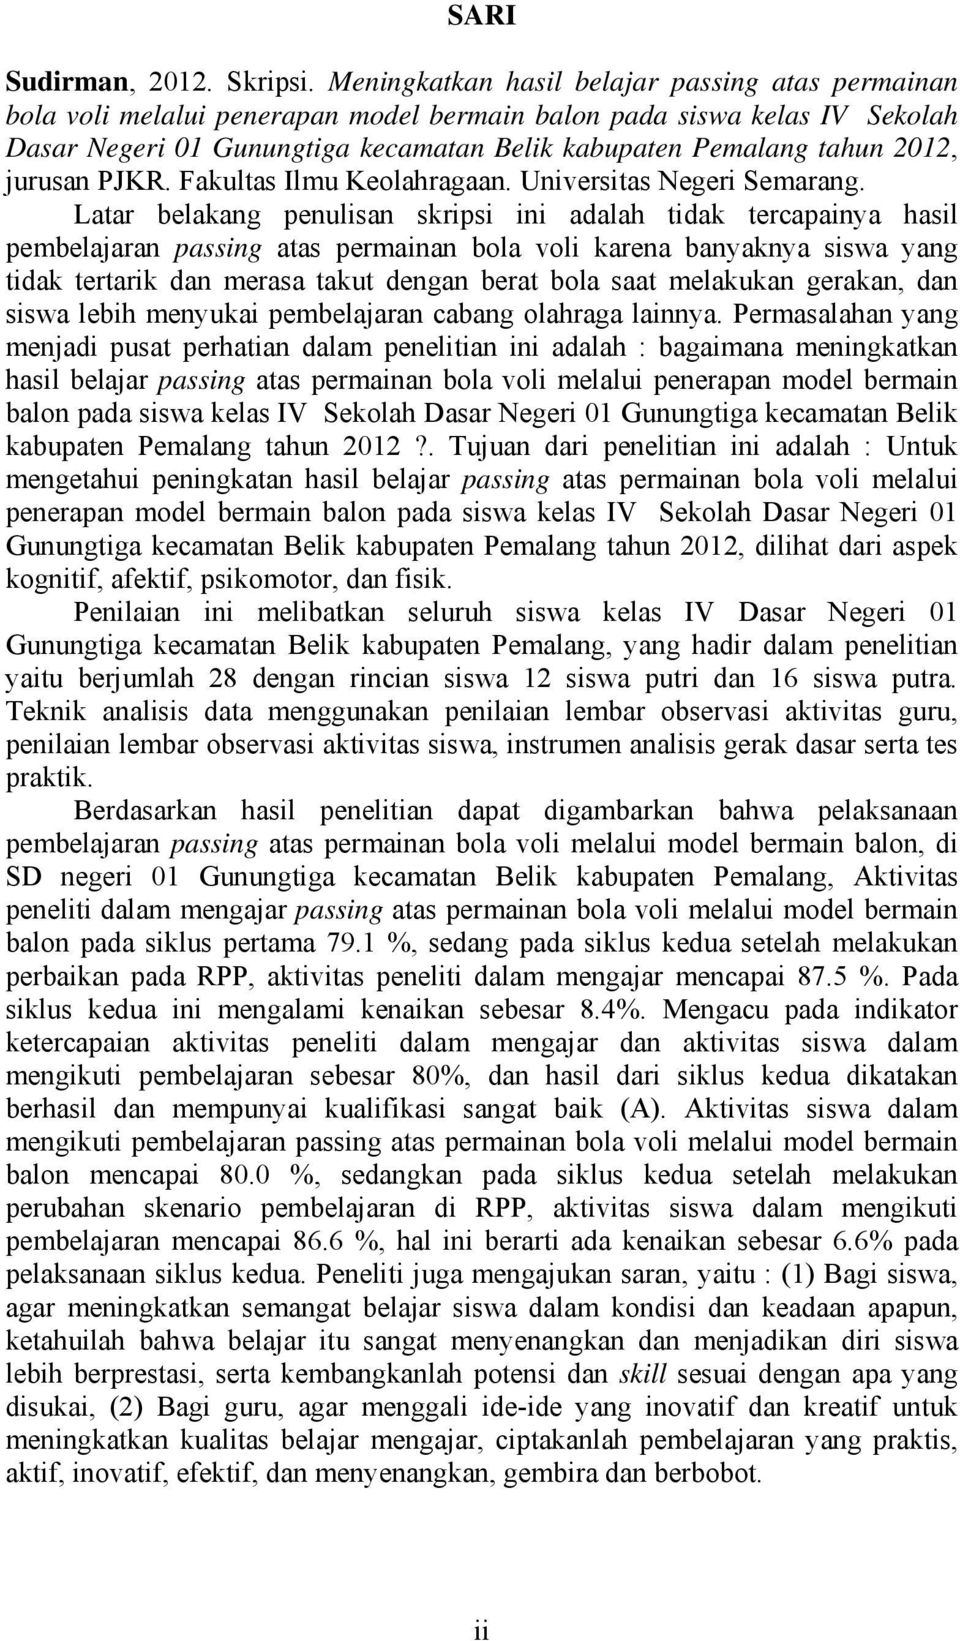 jurusan PJKR. Fakultas Ilmu Keolahragaan. Universitas Negeri Semarang.